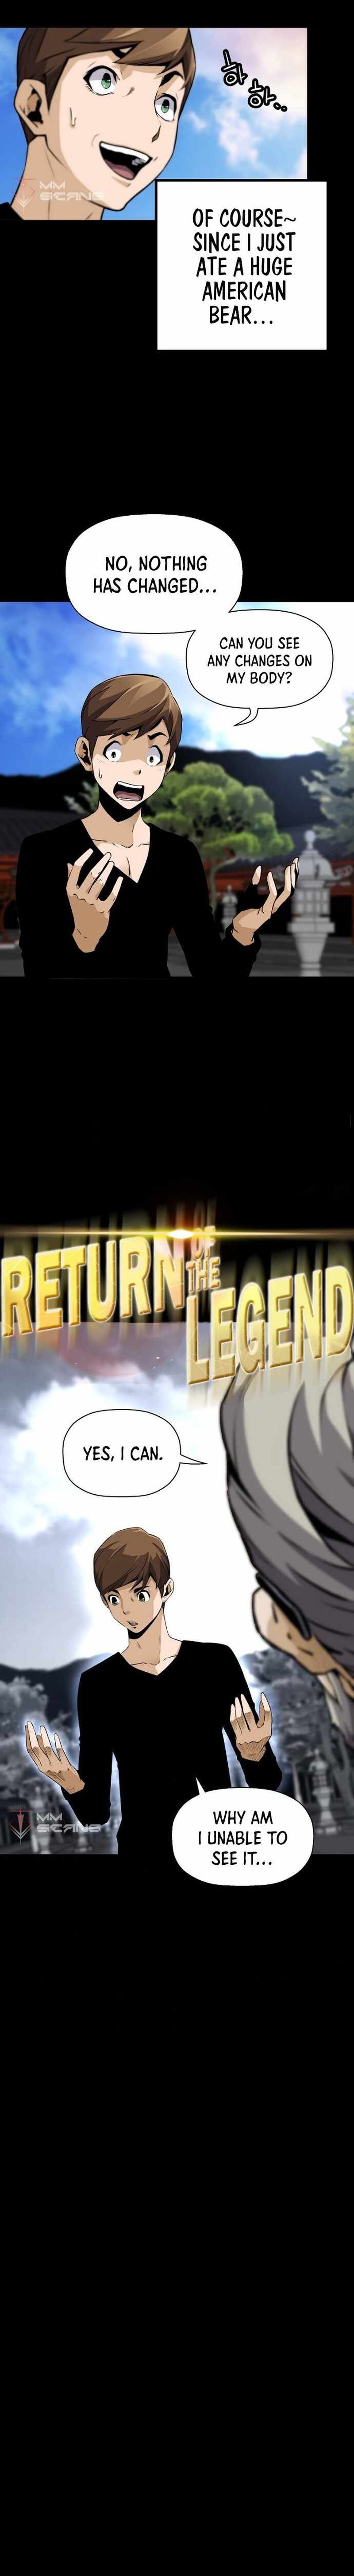 Return Of The Legend 32 2